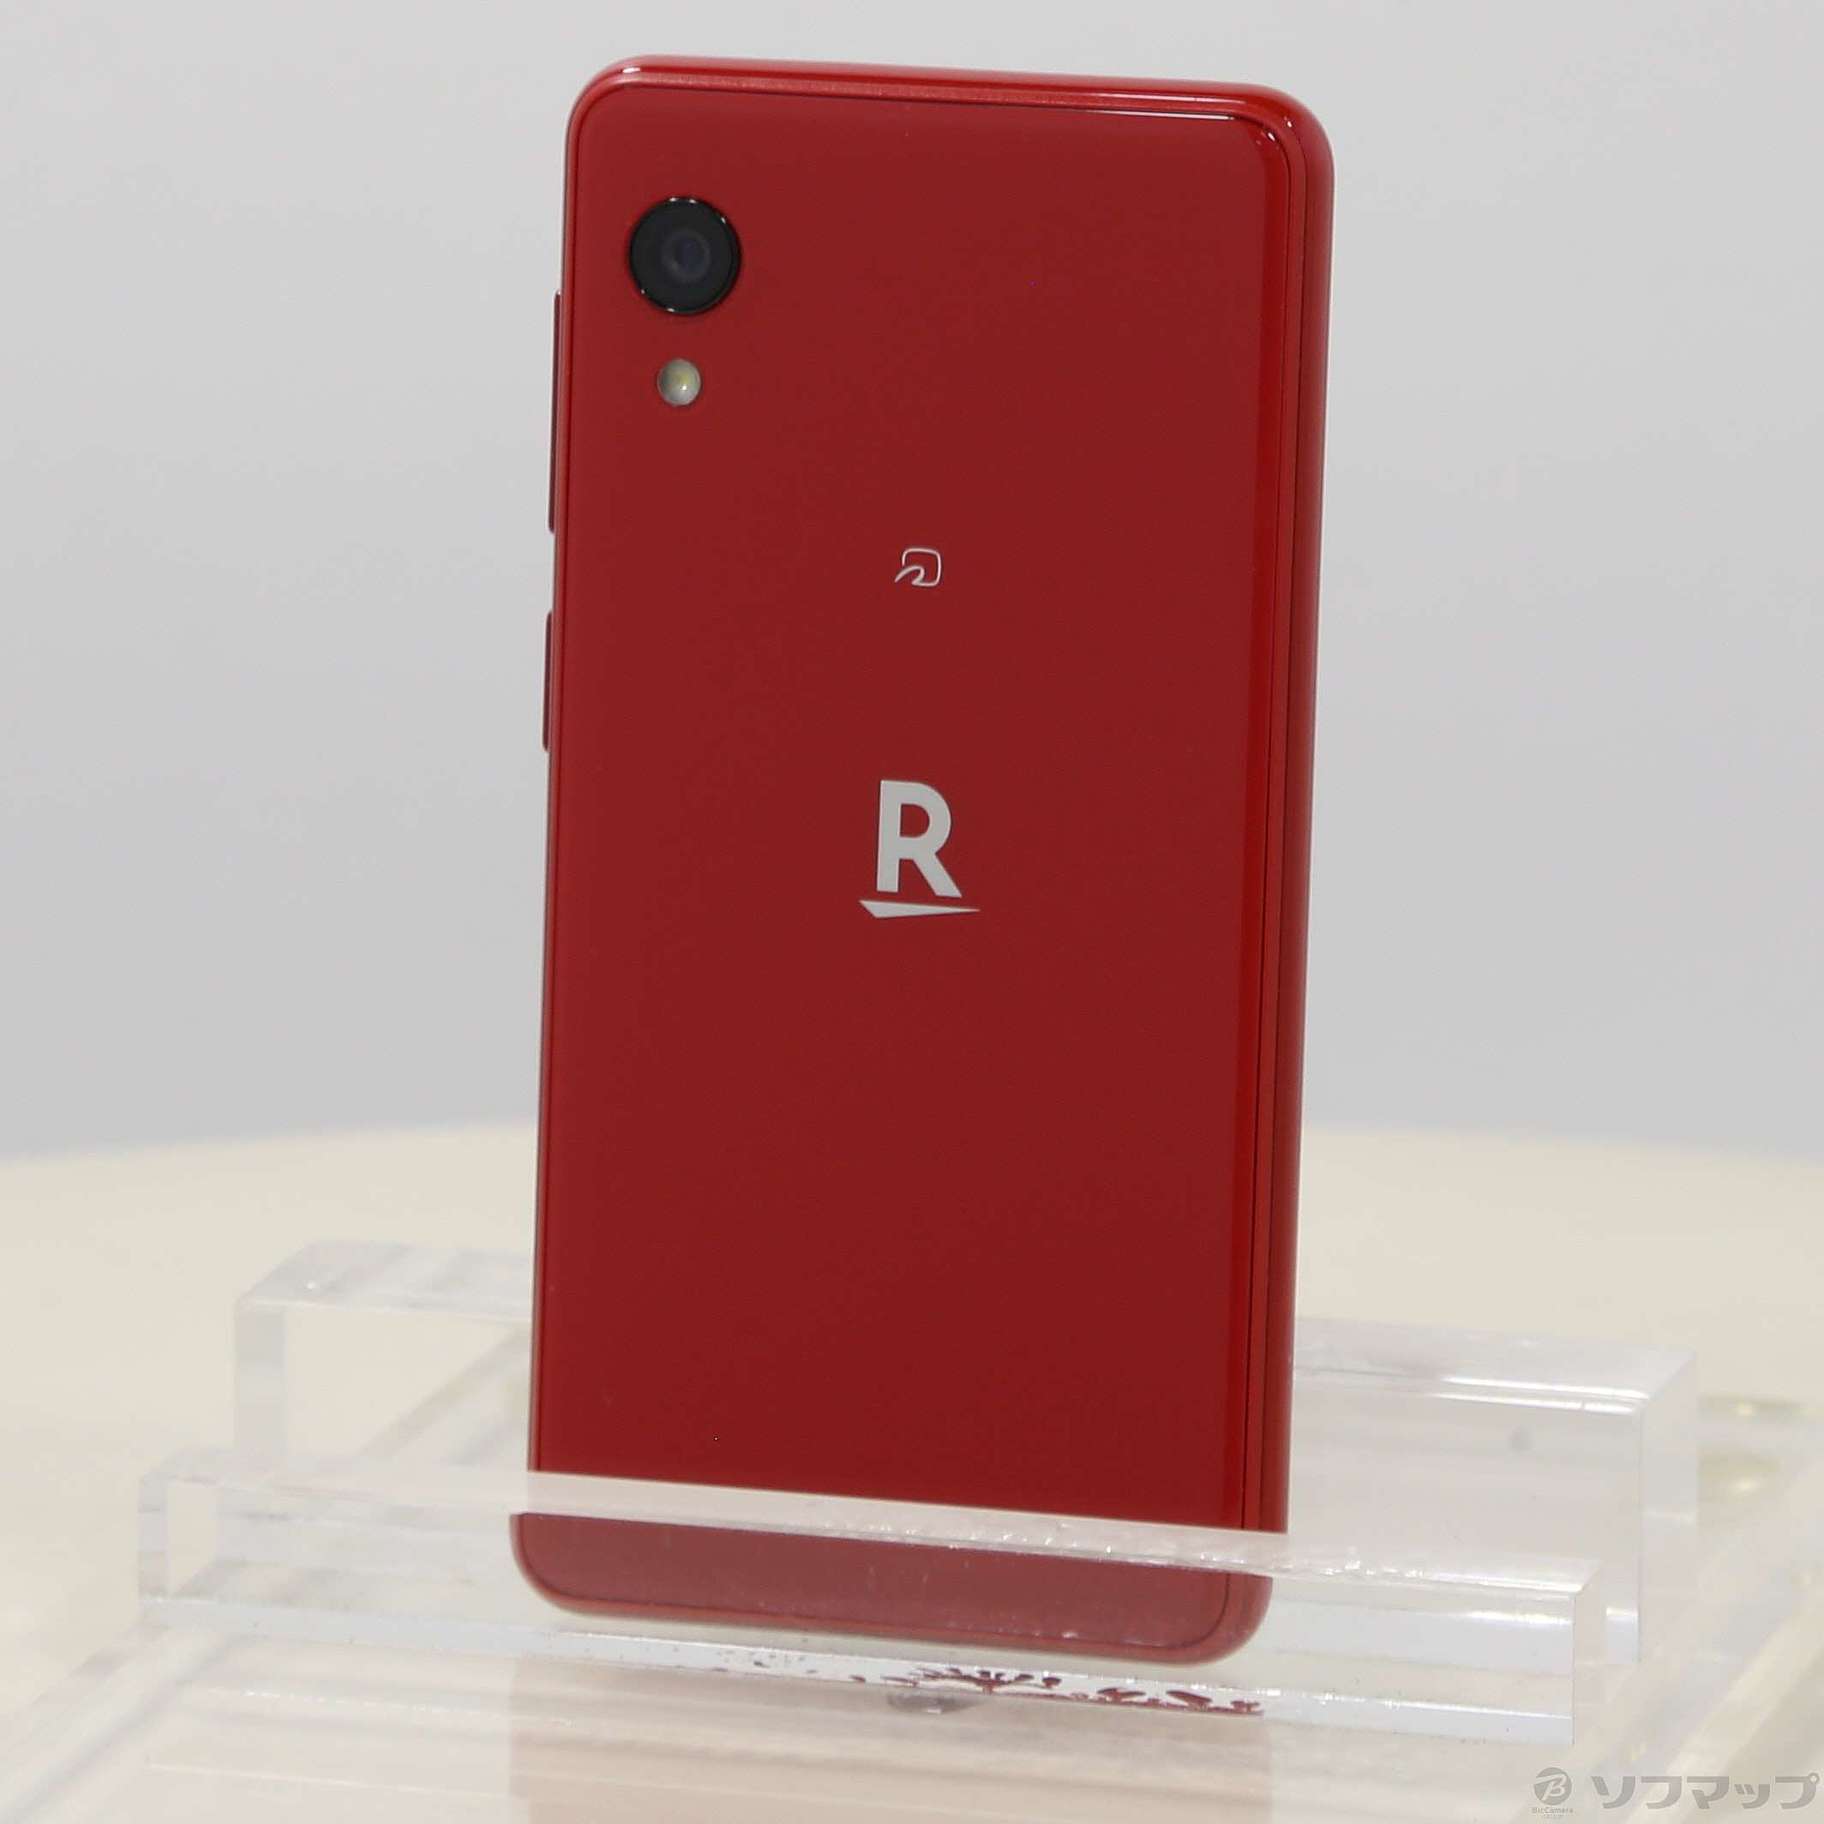 Rakuten Mini クリムゾンレッド 32GB - スマートフォン本体